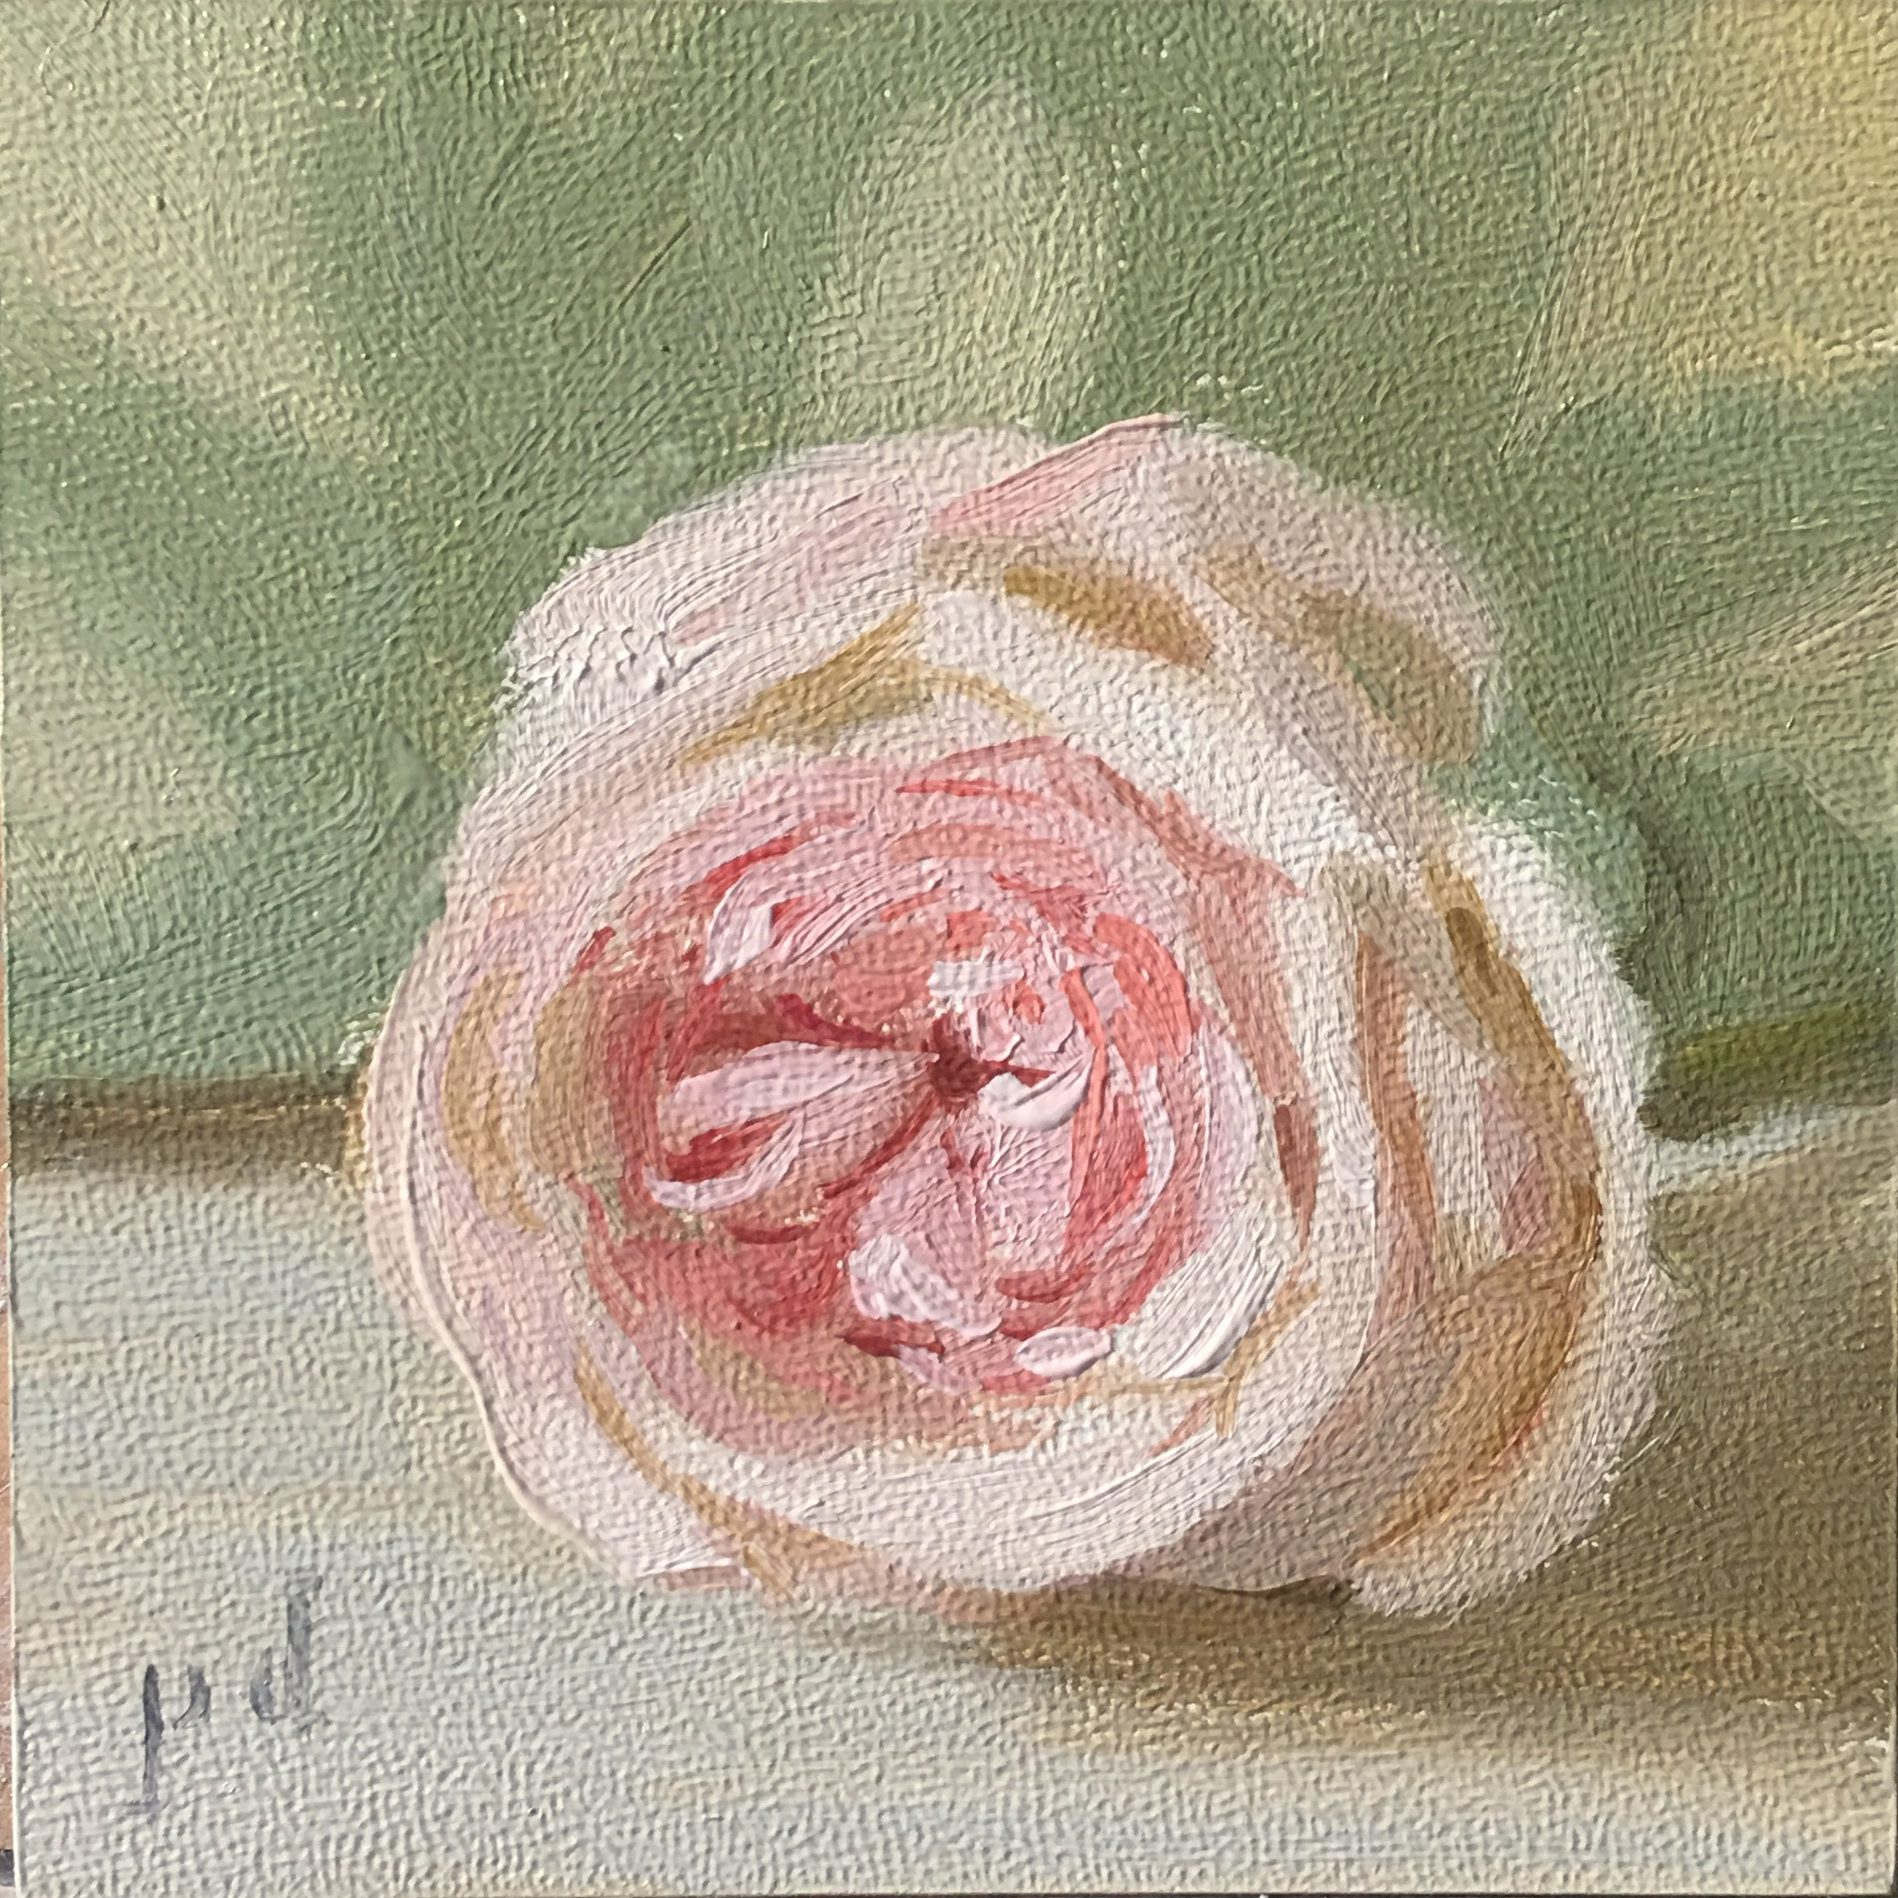 Blush Pink Rose oil painting copyright 2017 Peter Dickison